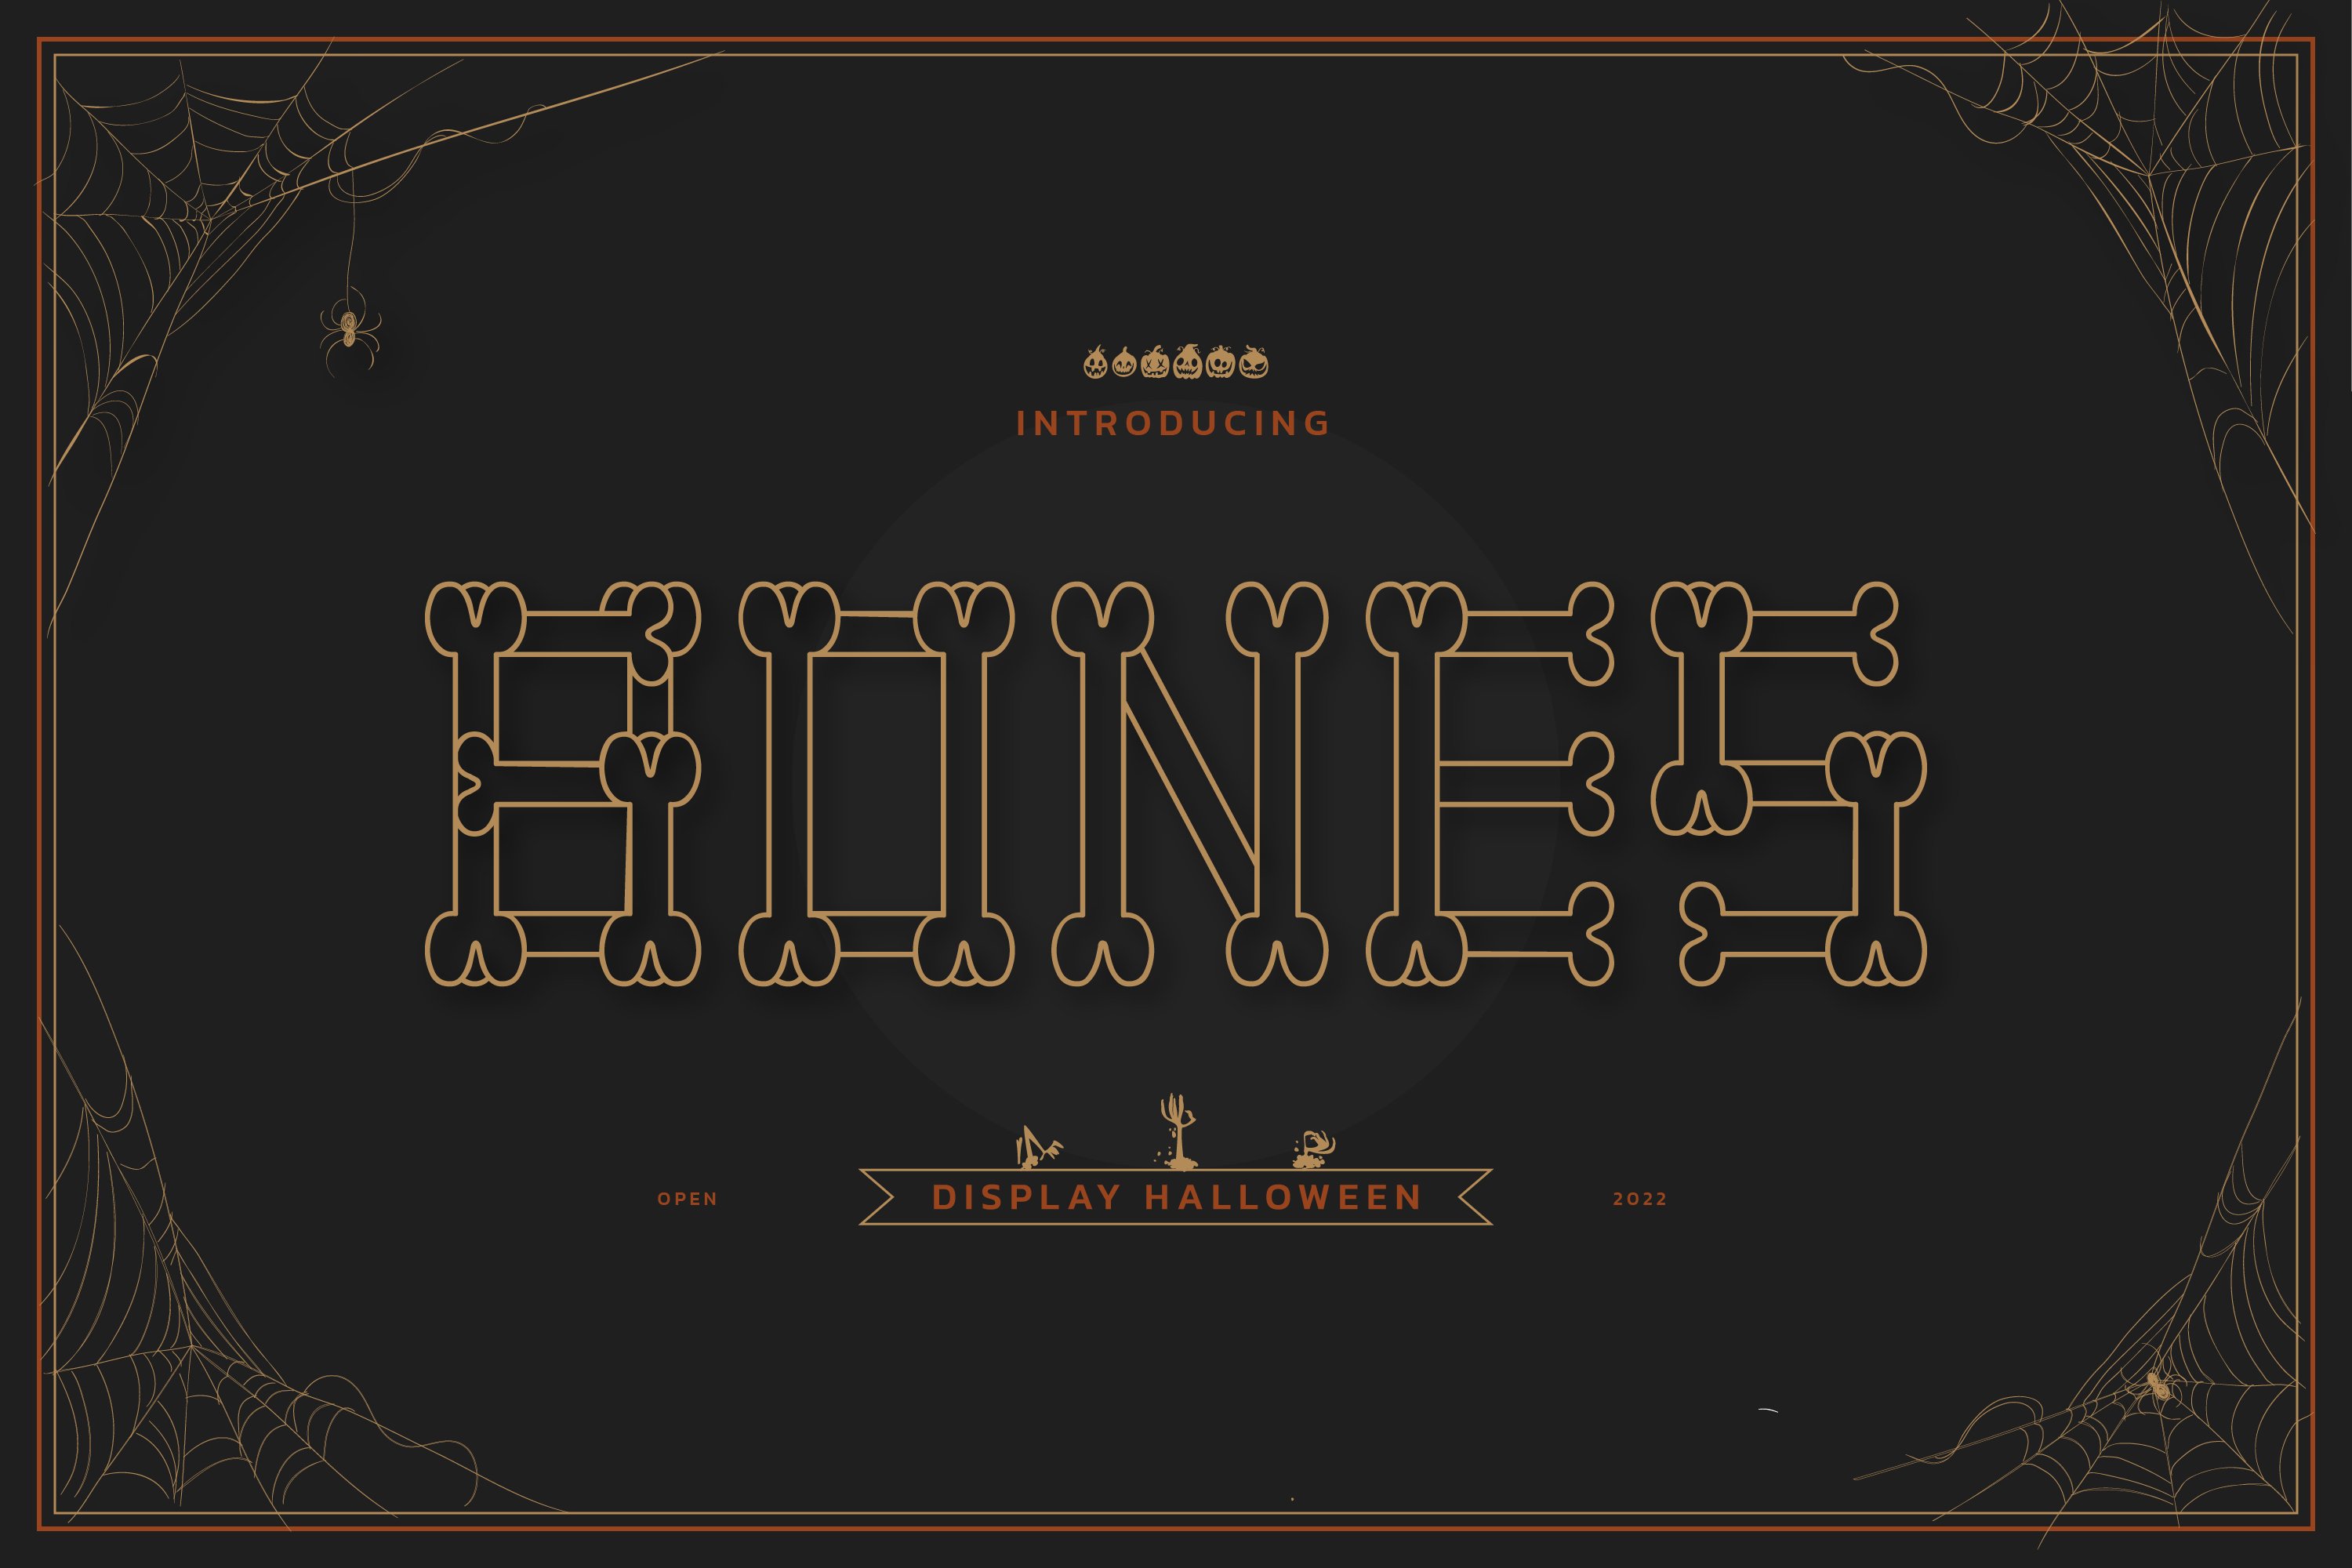 Bones Halloween Display Font cover image.